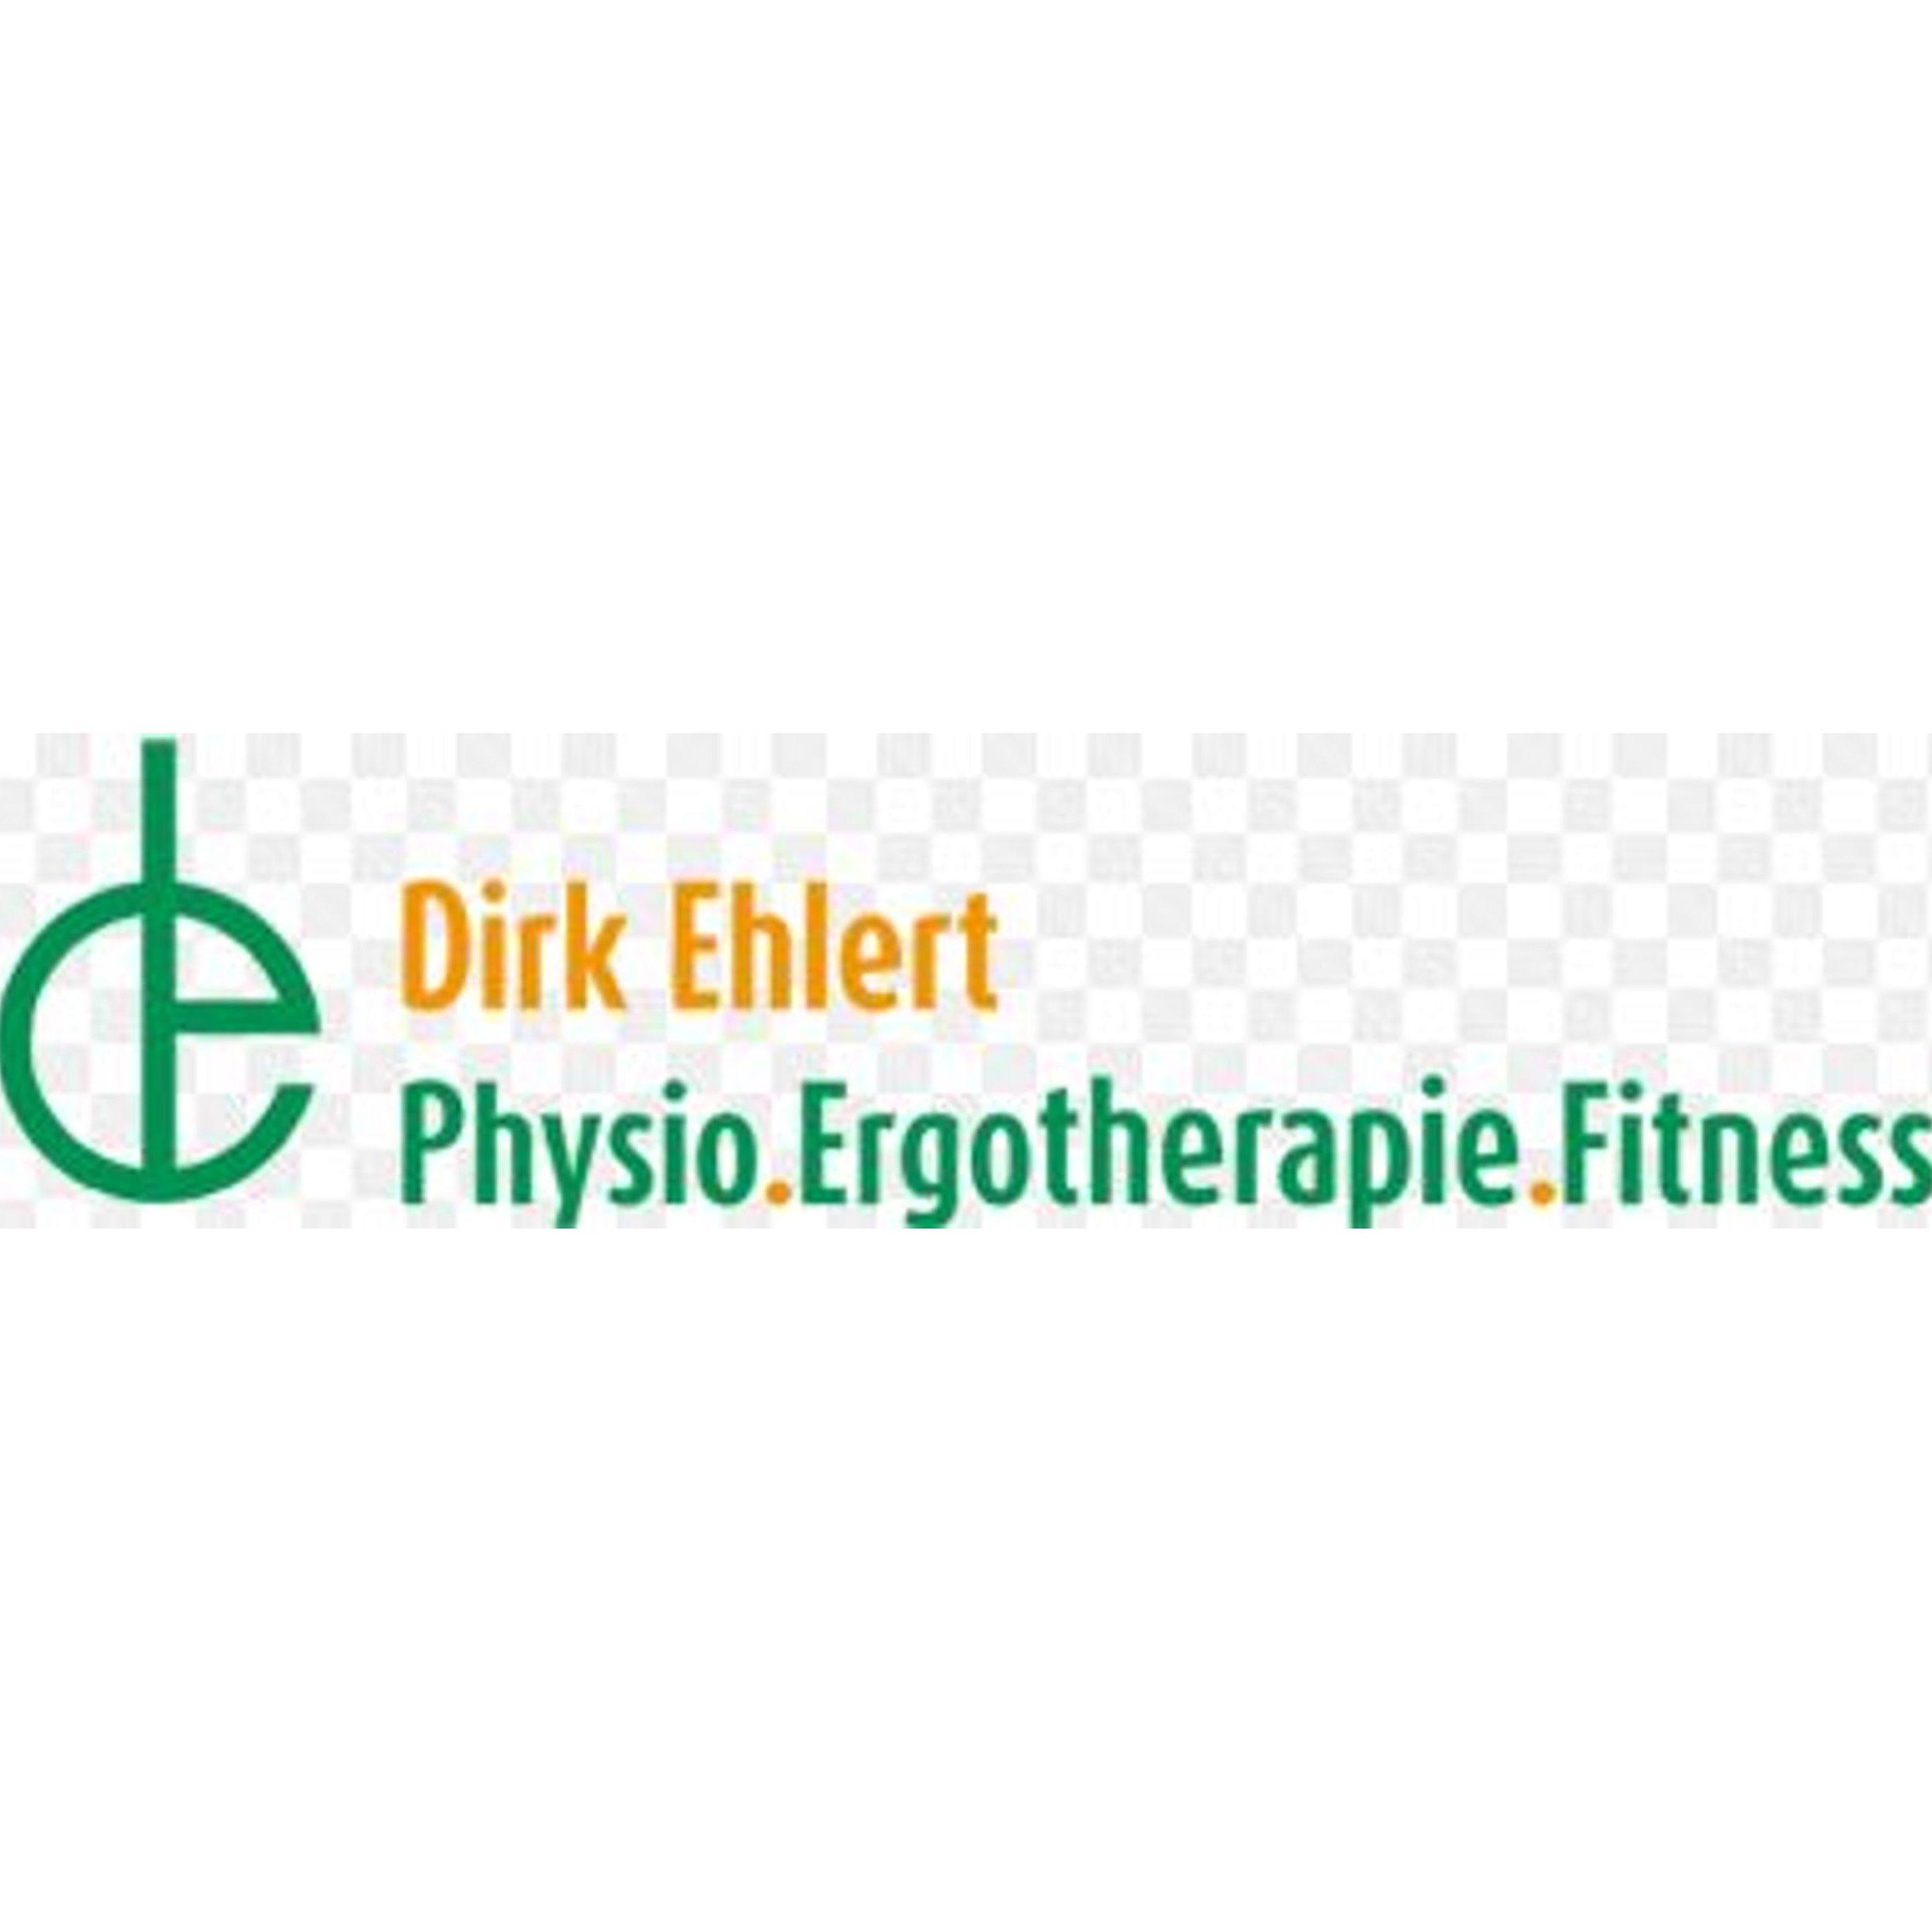 Logo Dirk Ehlert Physio. Ergotherapie. Fitness